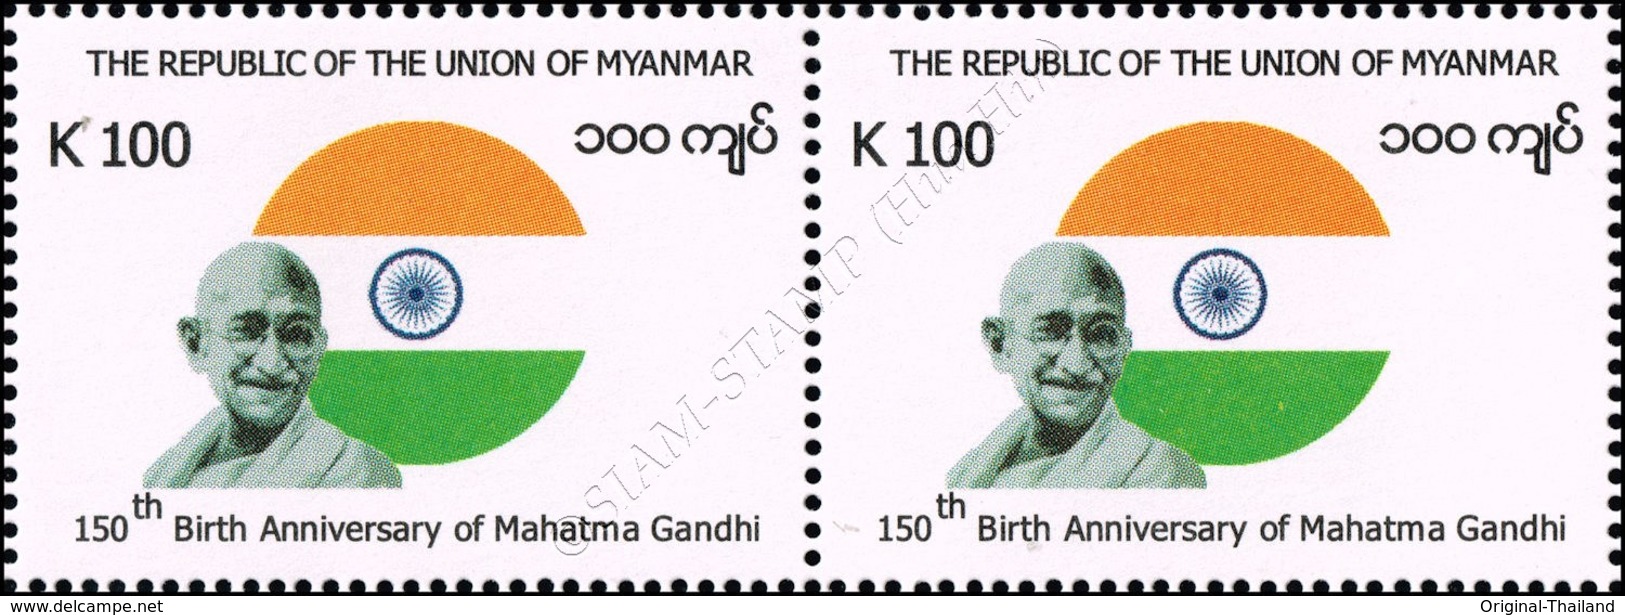 150th Birth Anniversary Of Mahatma Gandhi -PAIR- (MNH) - Myanmar (Burma 1948-...)